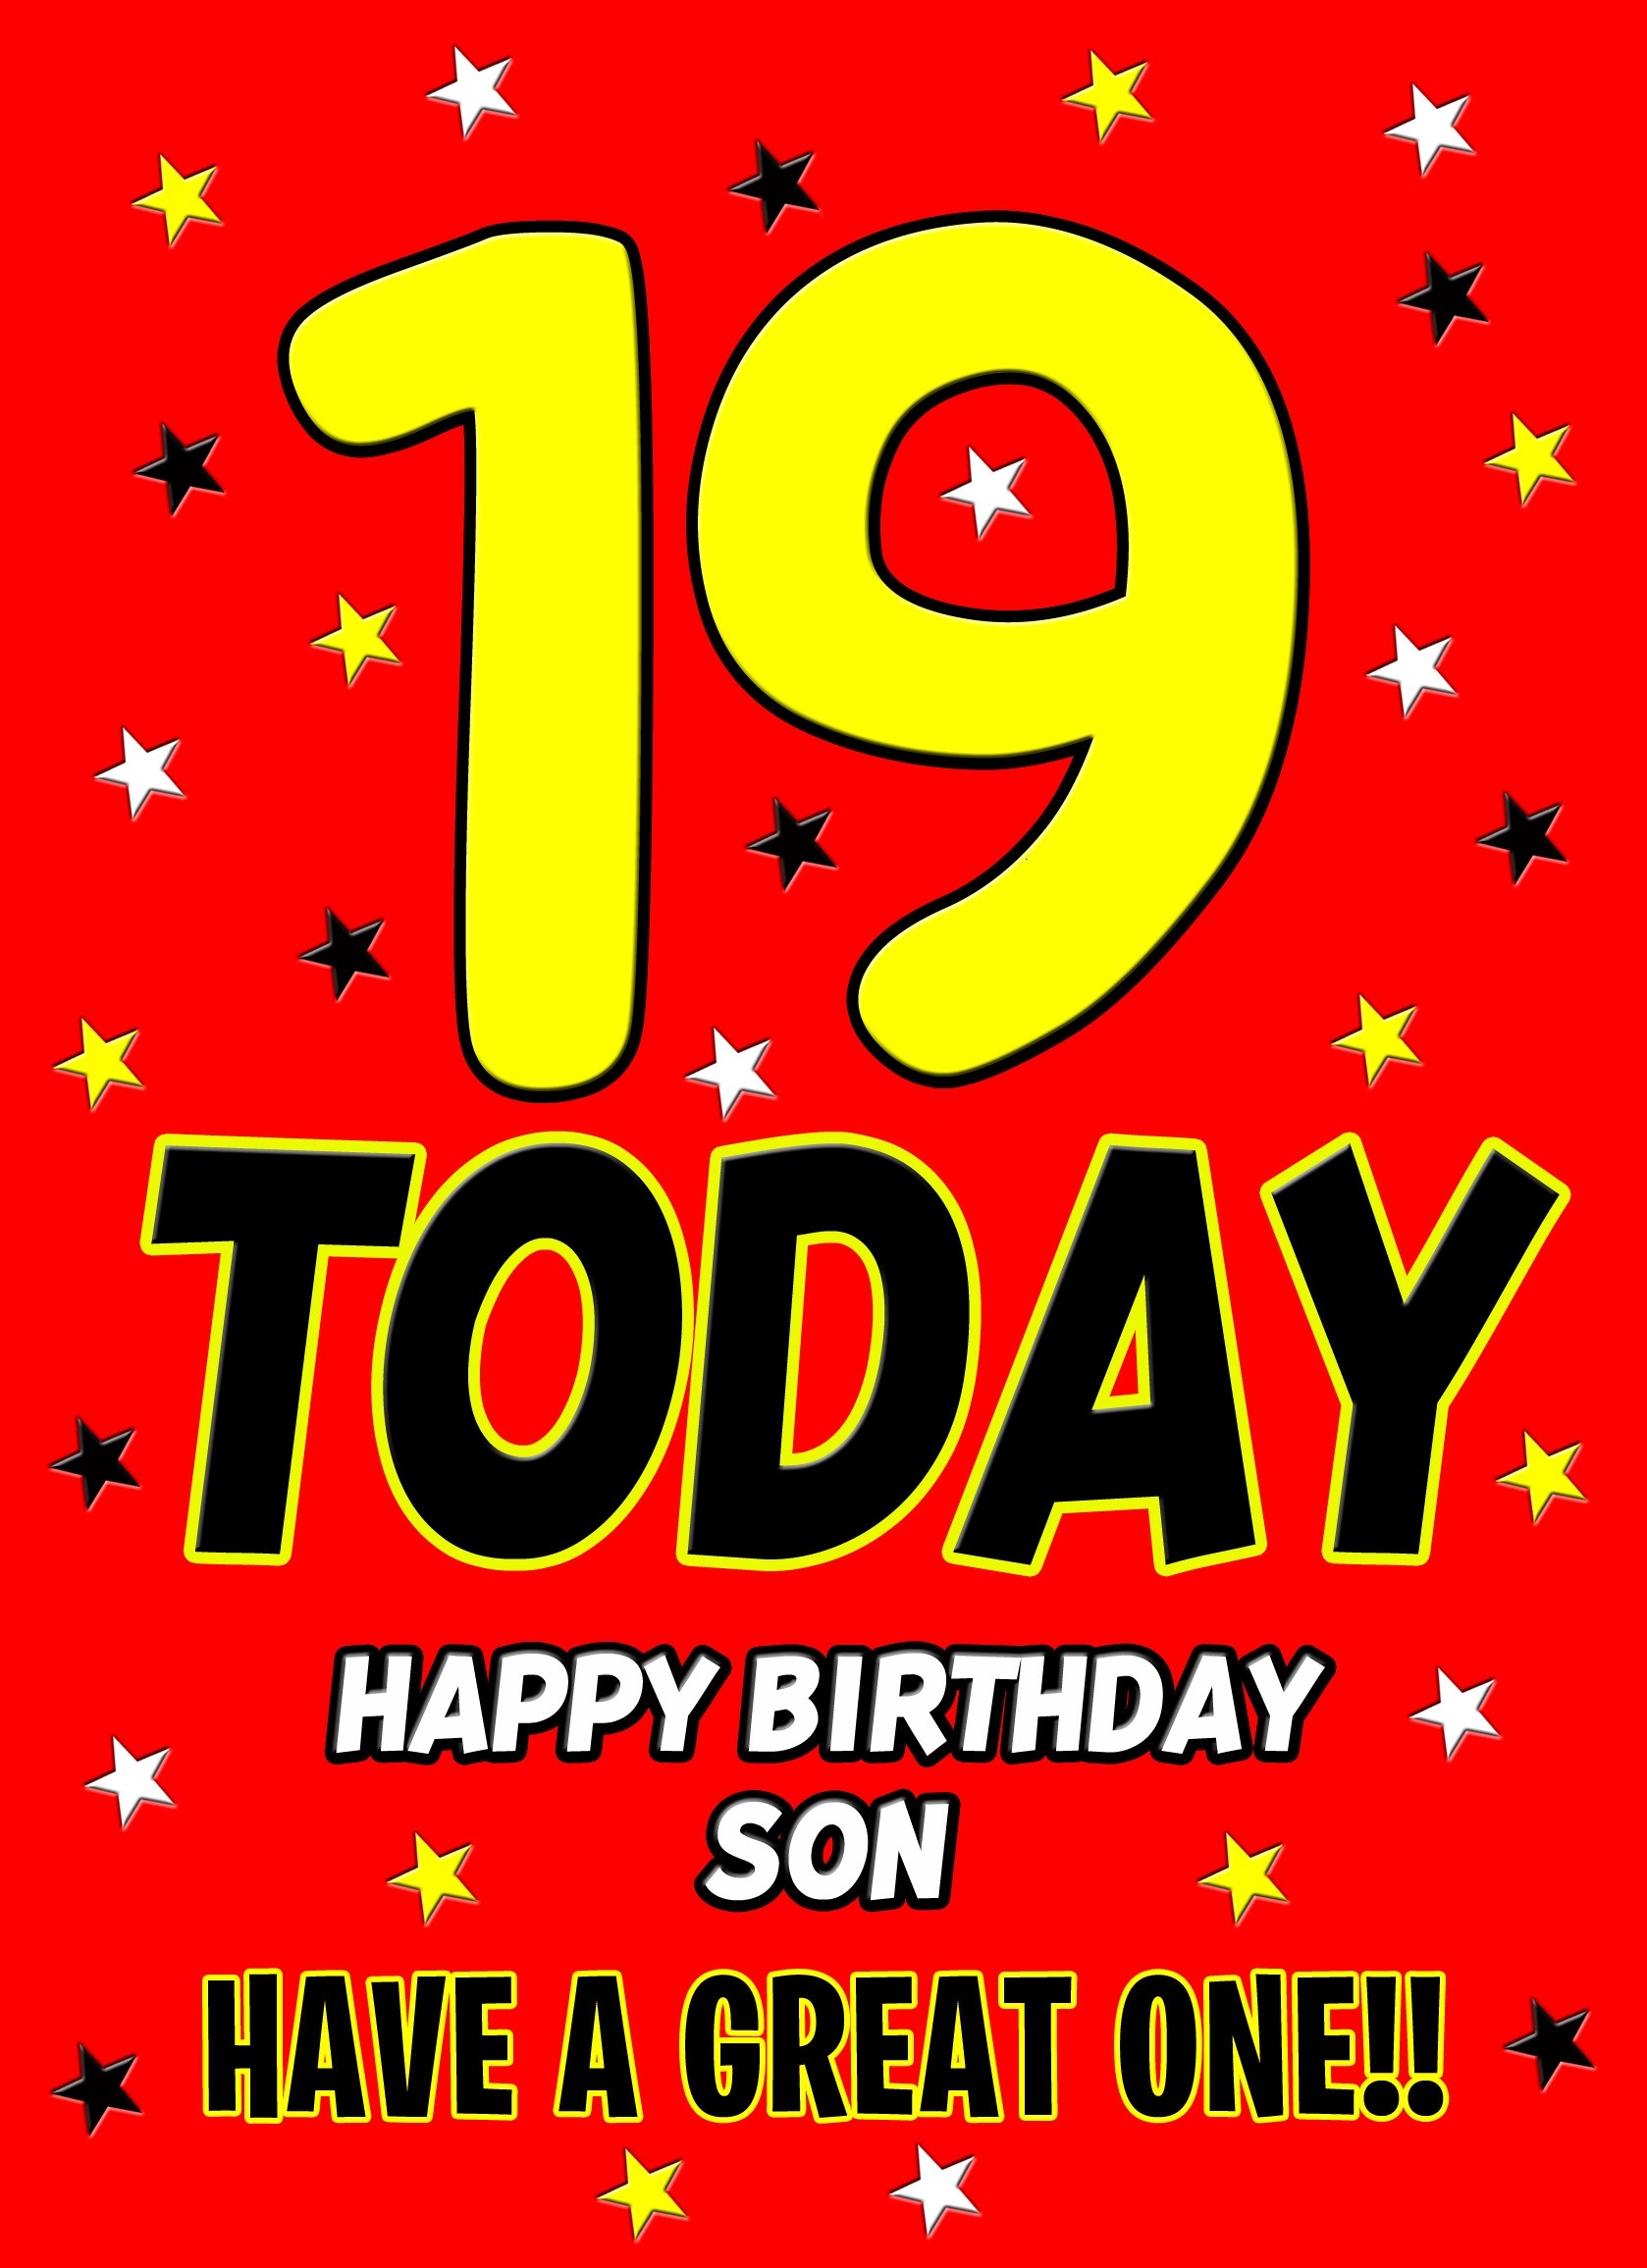 19 Today Birthday Card (Son)